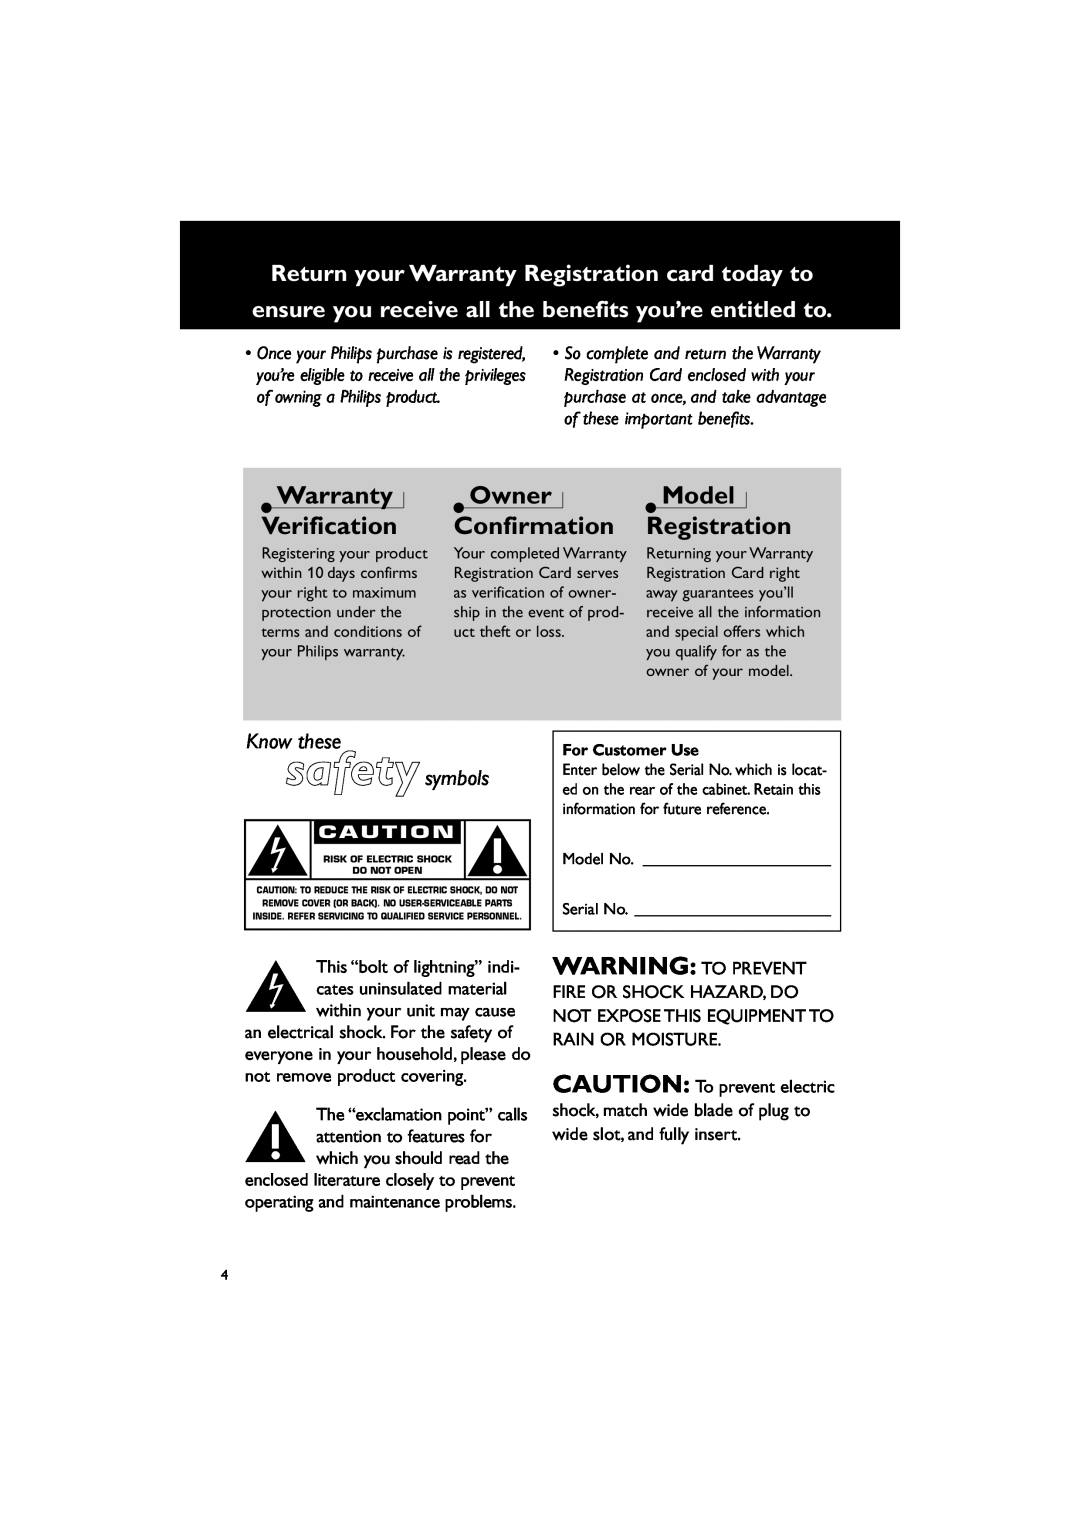 Philips FWM587/37B warranty Owner Confirmation, Model Registration, Warranty Verification, Know these safety symbols 